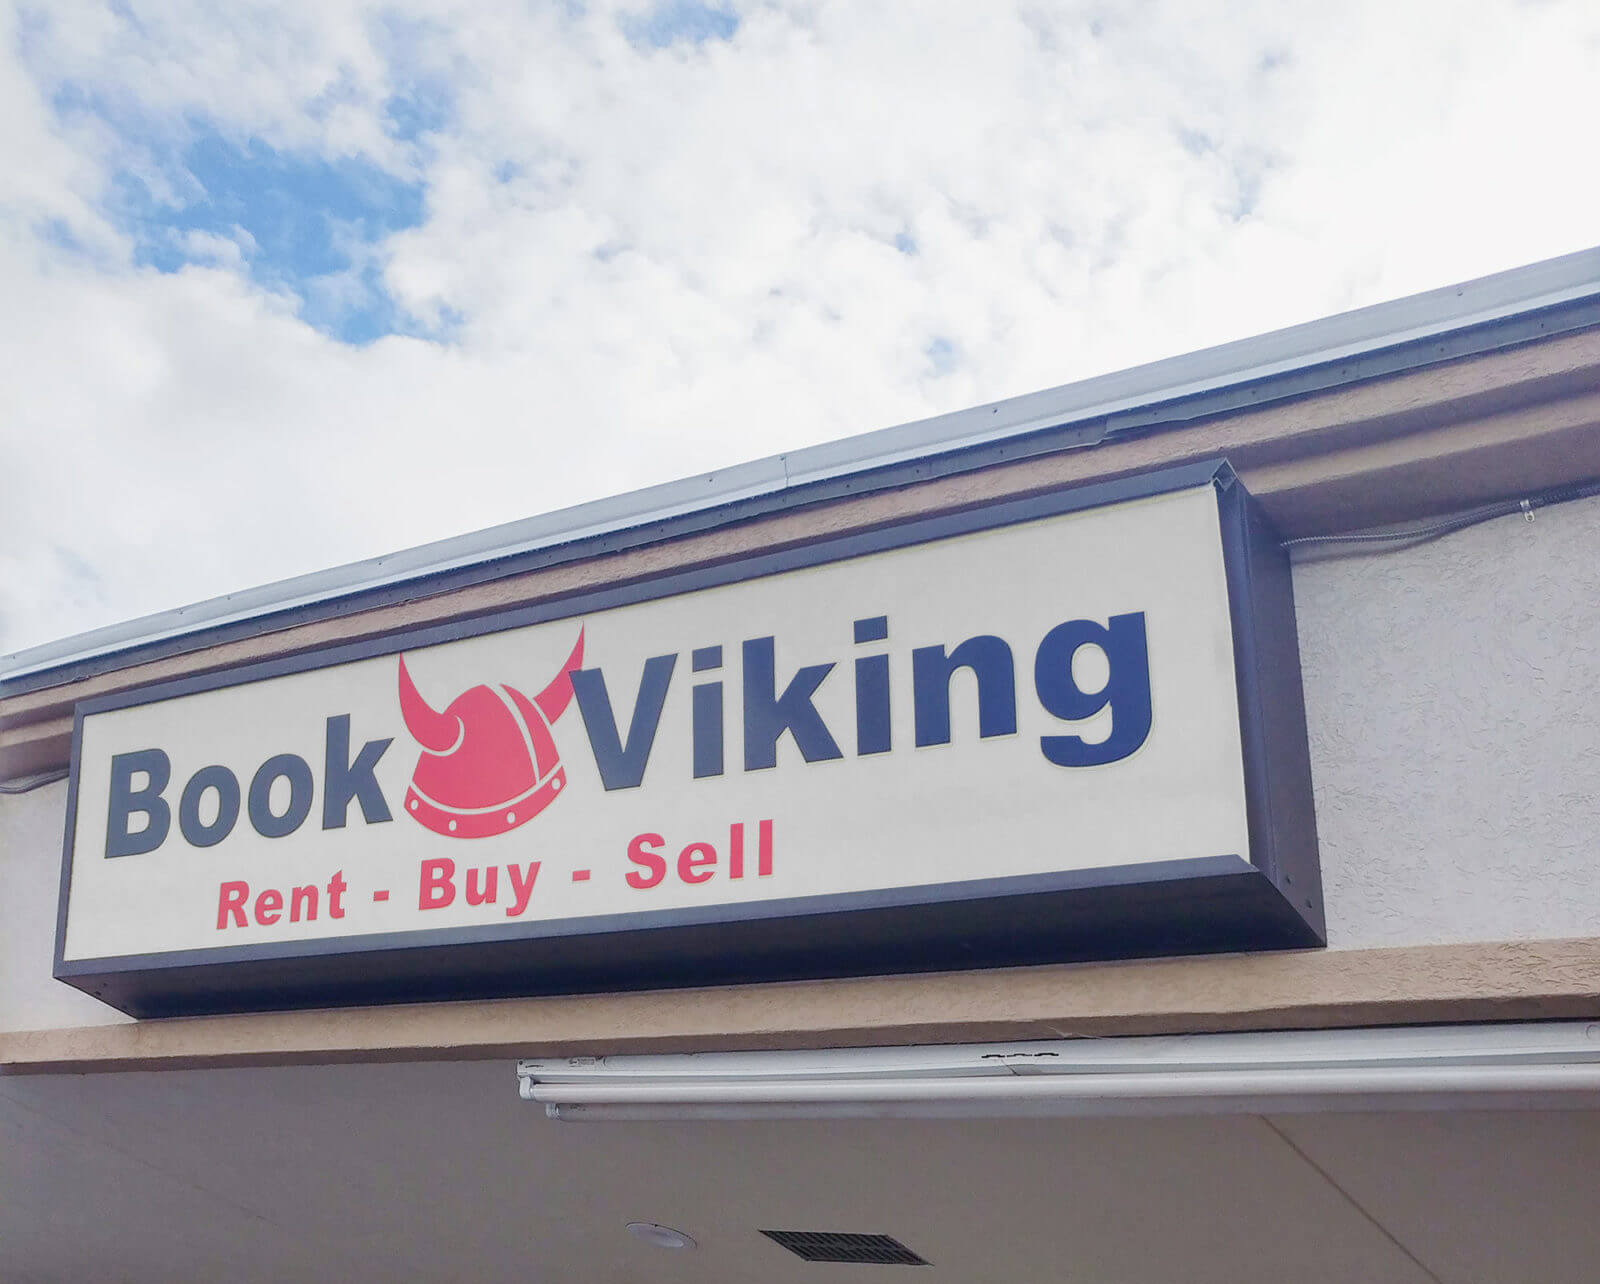 Book Viking - Rexburg Online - A cheaper way to get textbooks!